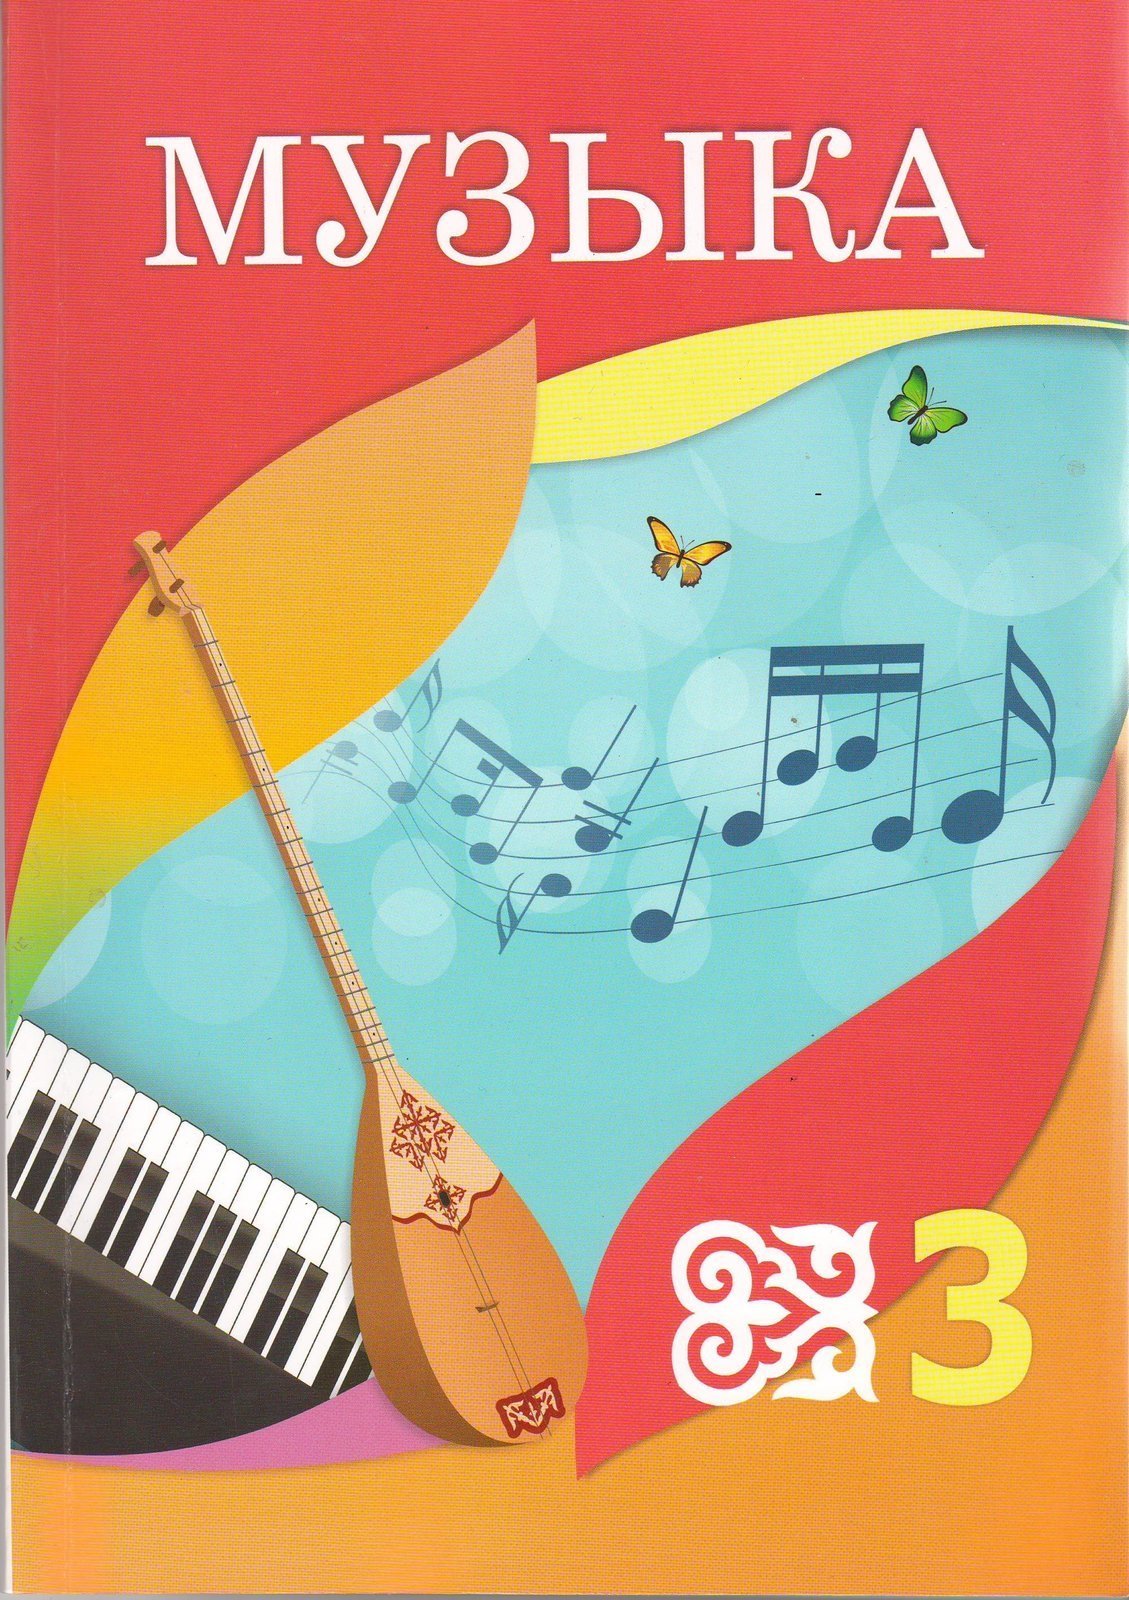 Музыка книга 6. Учебник по Музыке. Учебник по Музыке 3 класс. Обложки книг по Музыке. Музыкальная книга по Музыке.